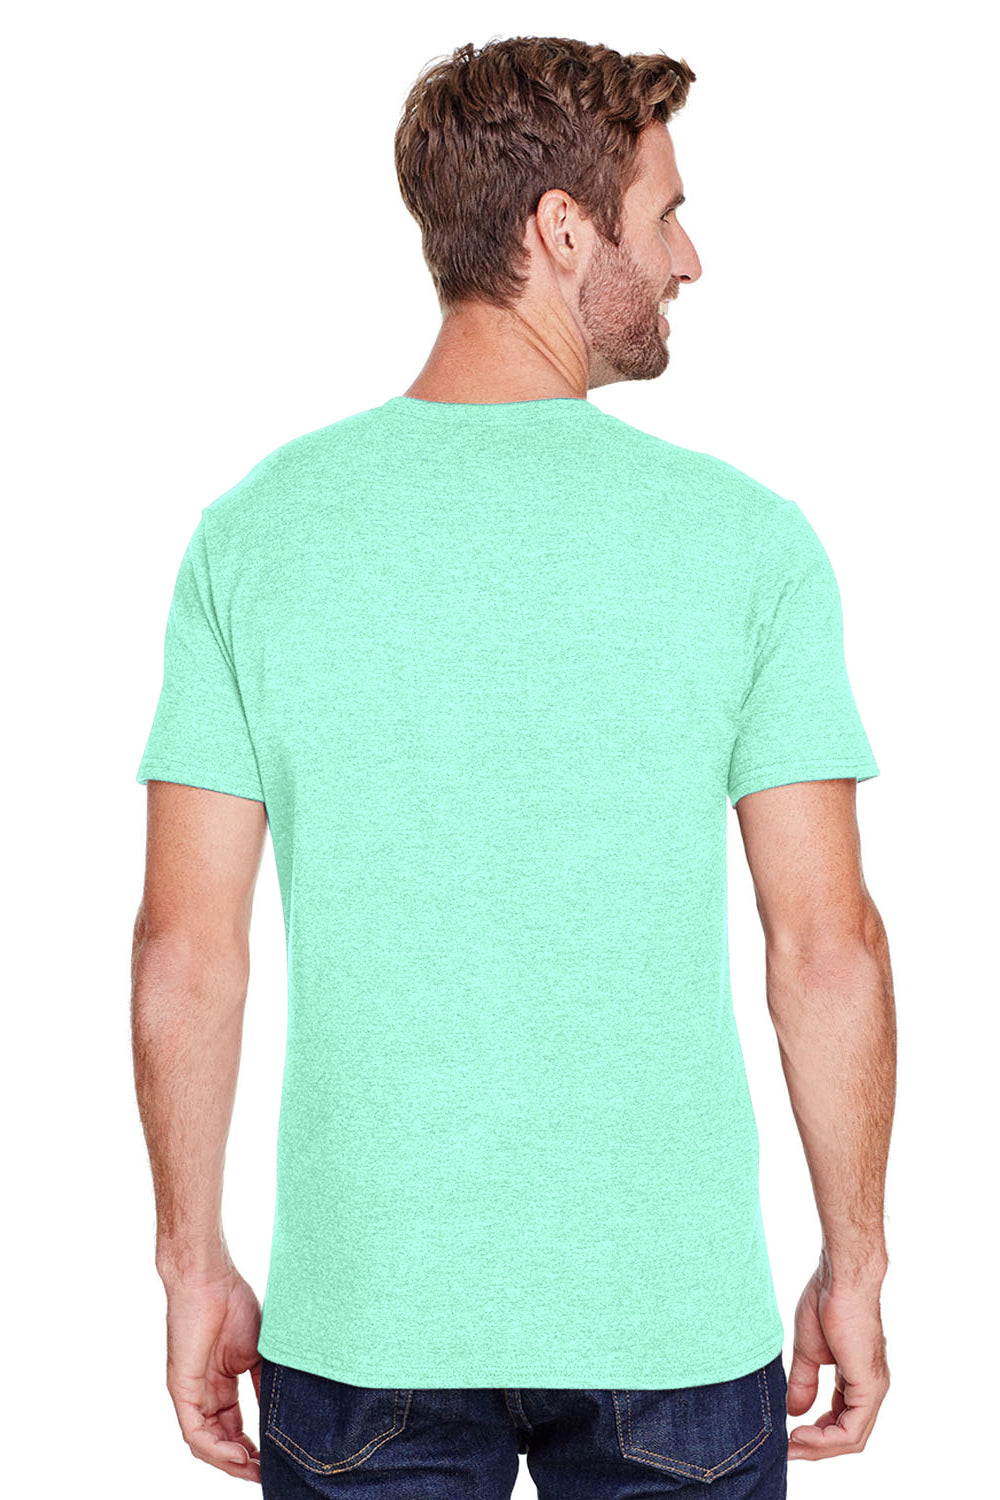 Jerzees 560MR Mens Premium Blend Short Sleeve Crewneck T-Shirt Heather Mint Green Back